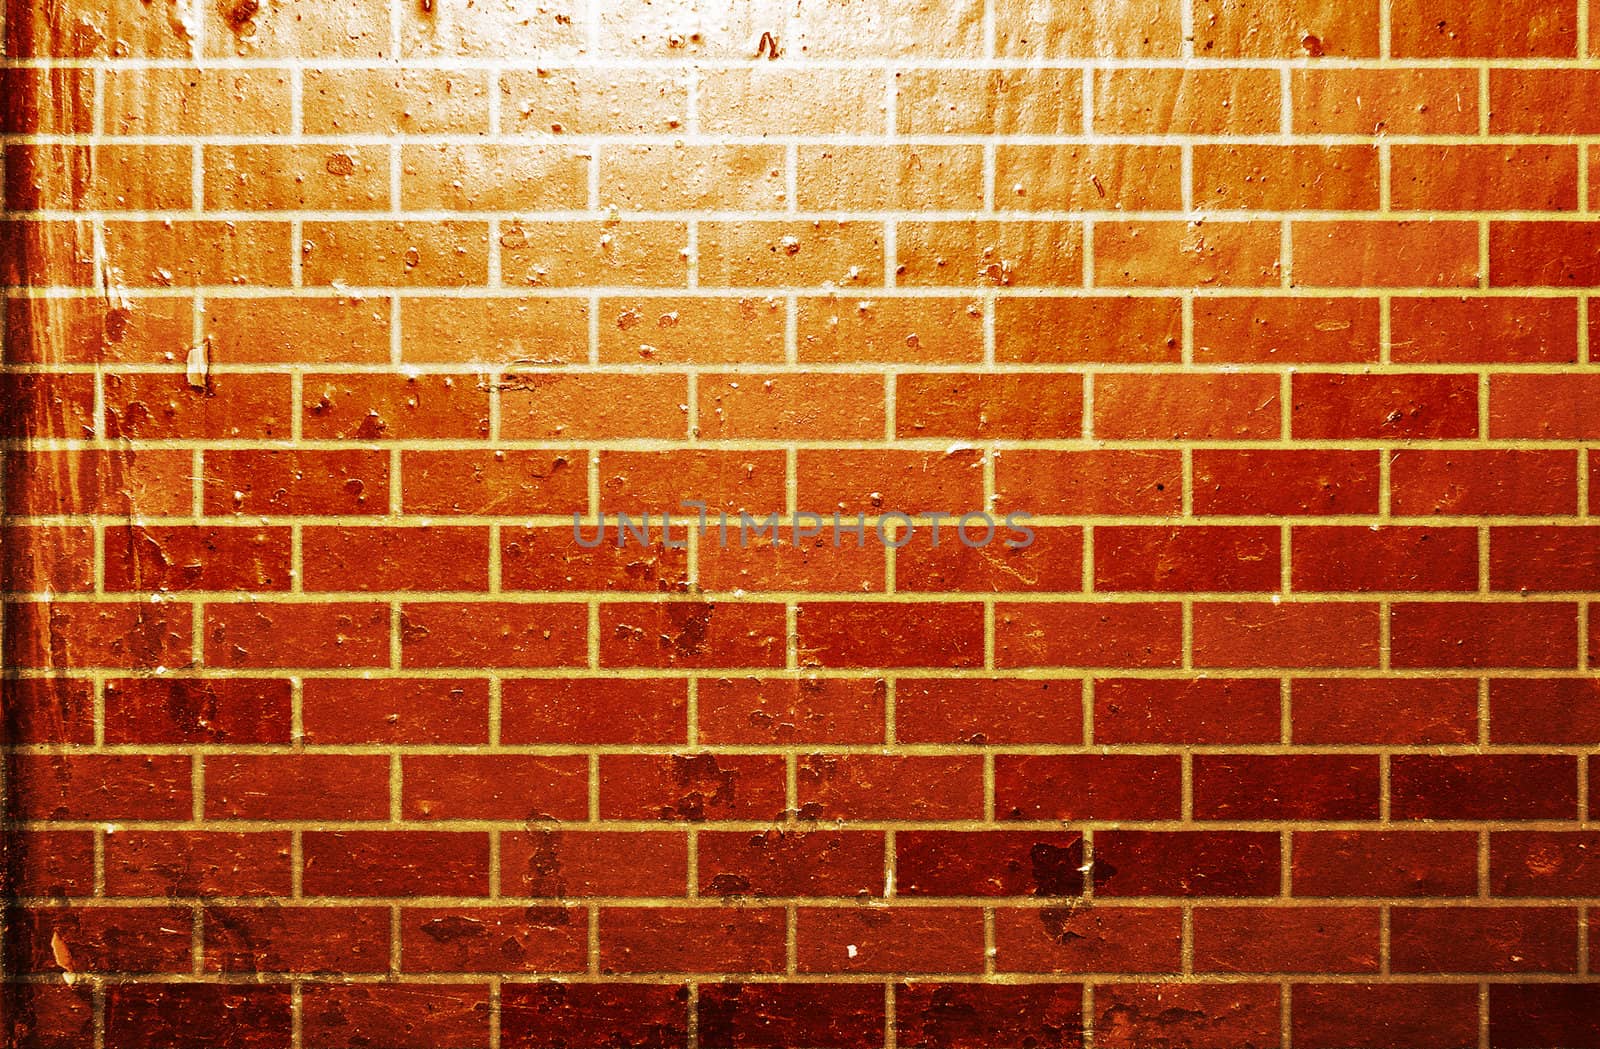 Grunge brick wall by kjpargeter